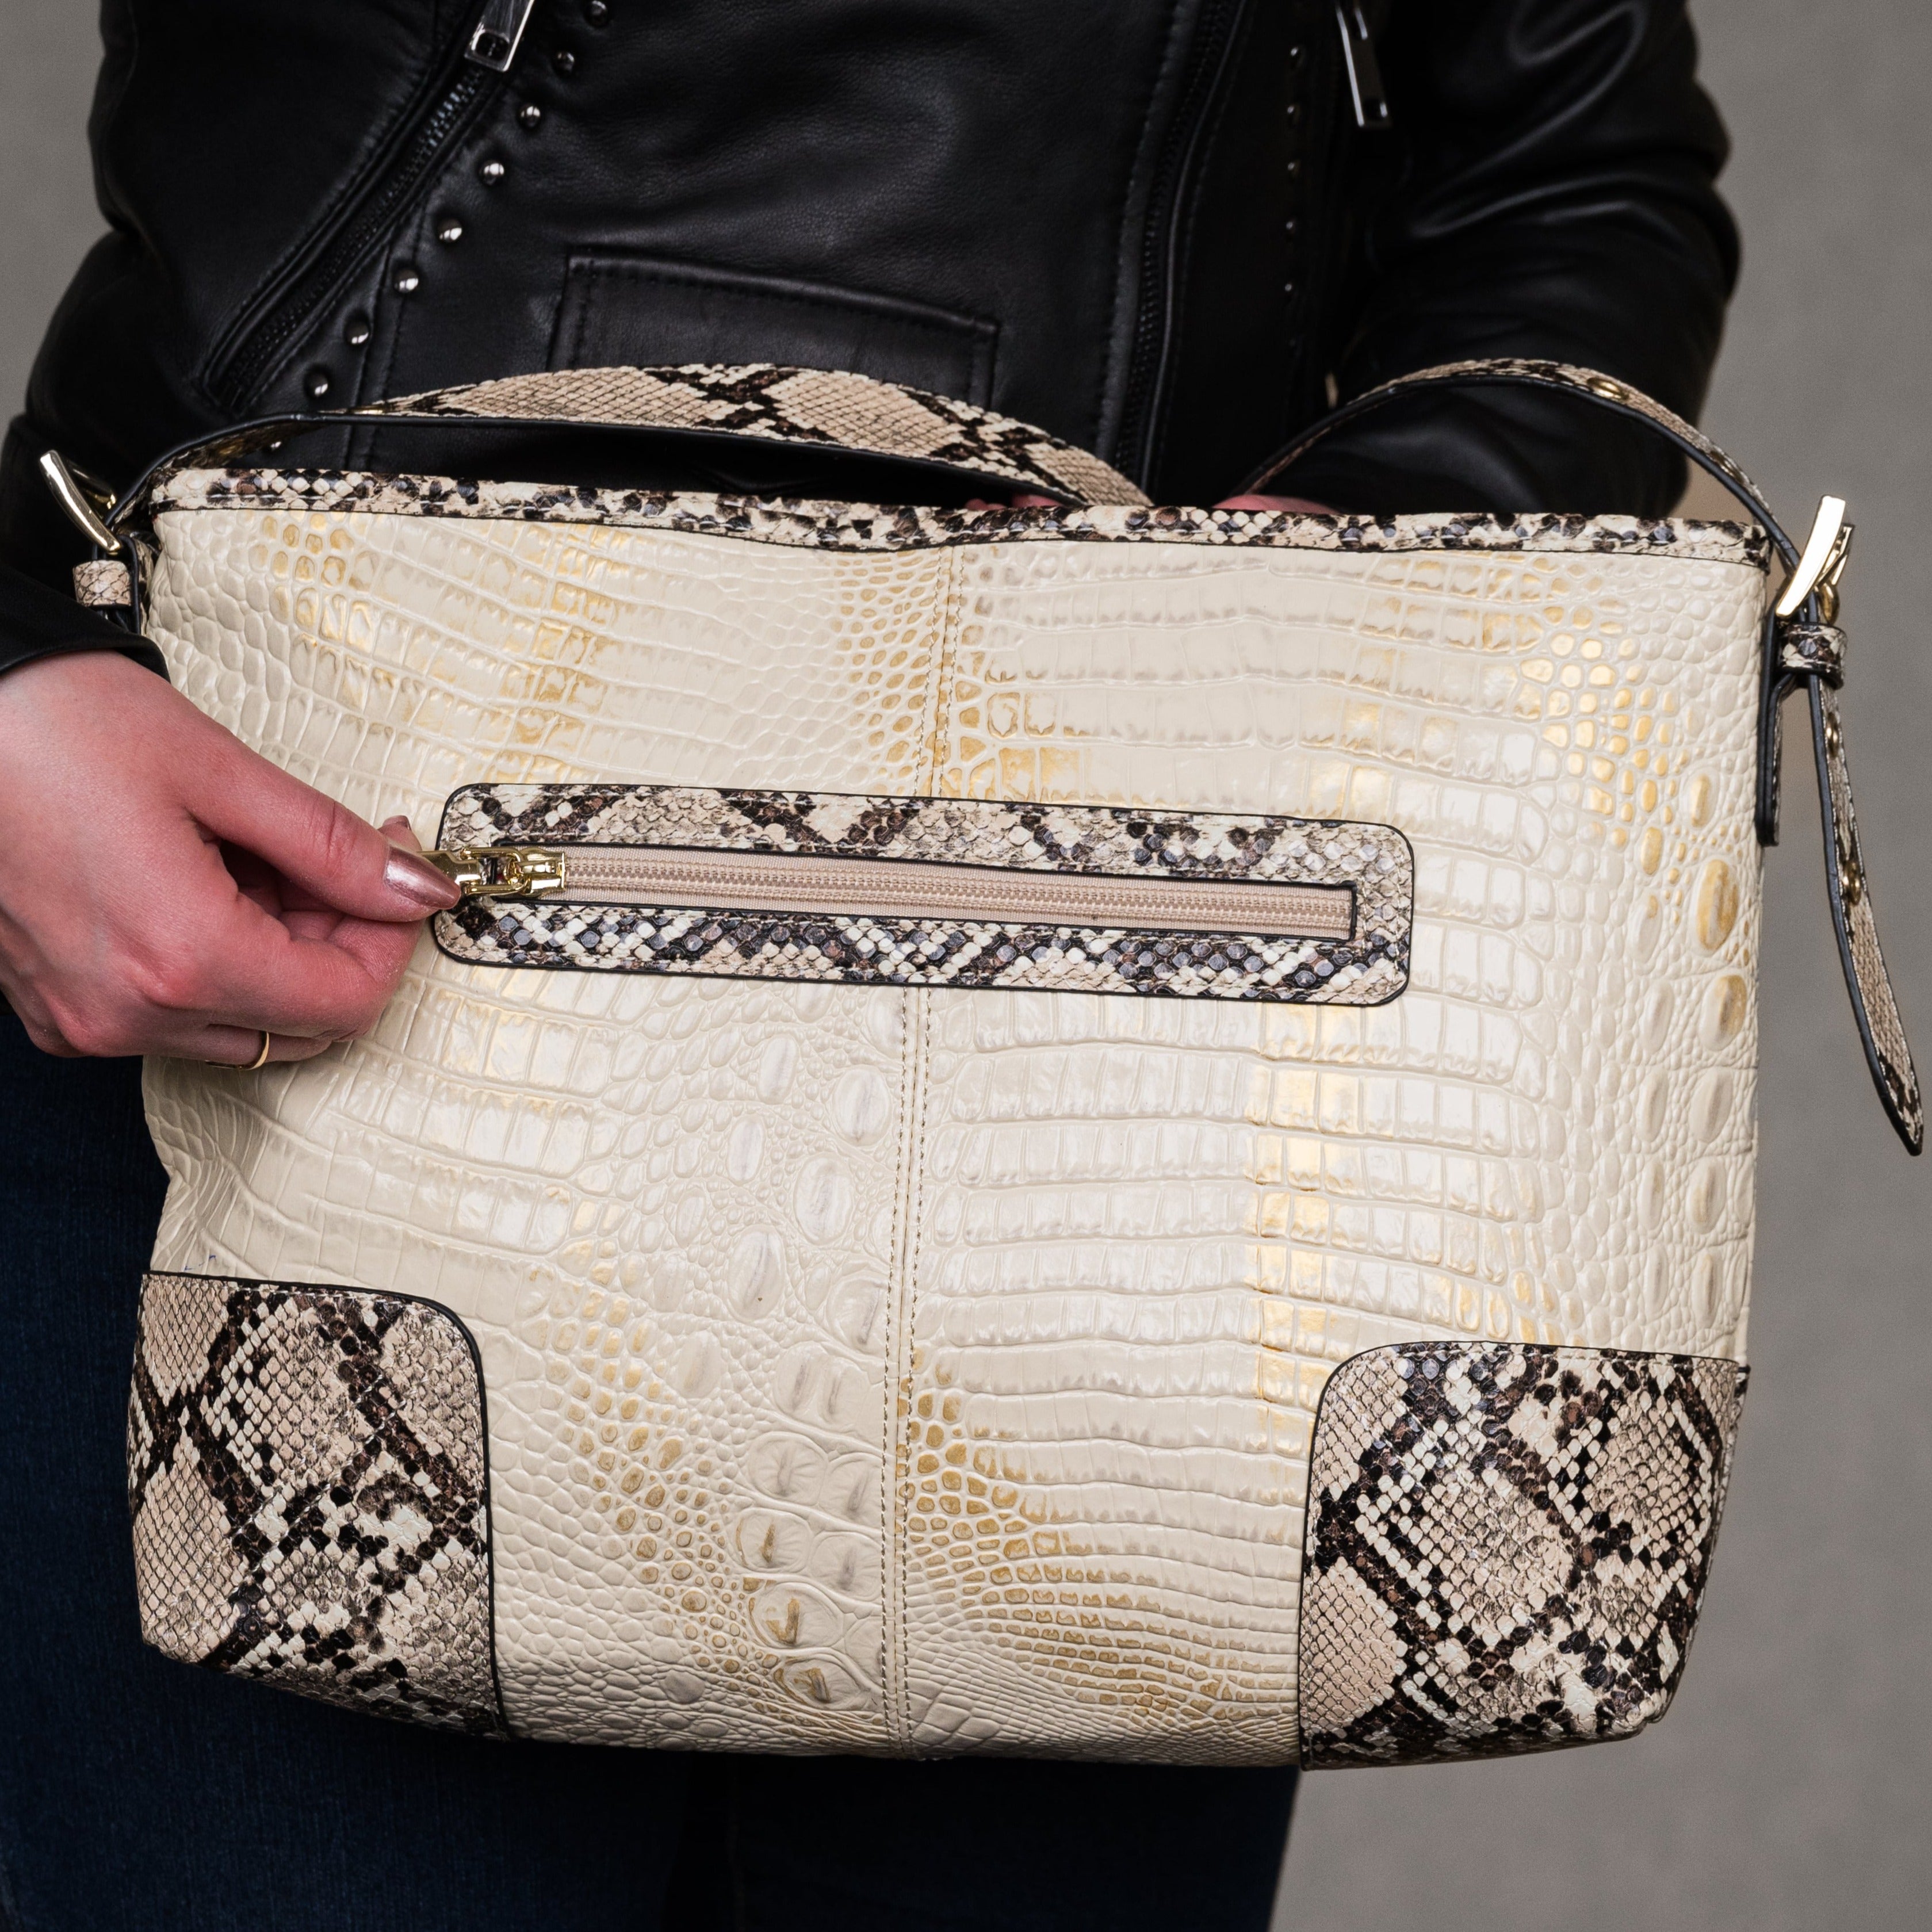 MET One Handled Leather Snake Print Handbag